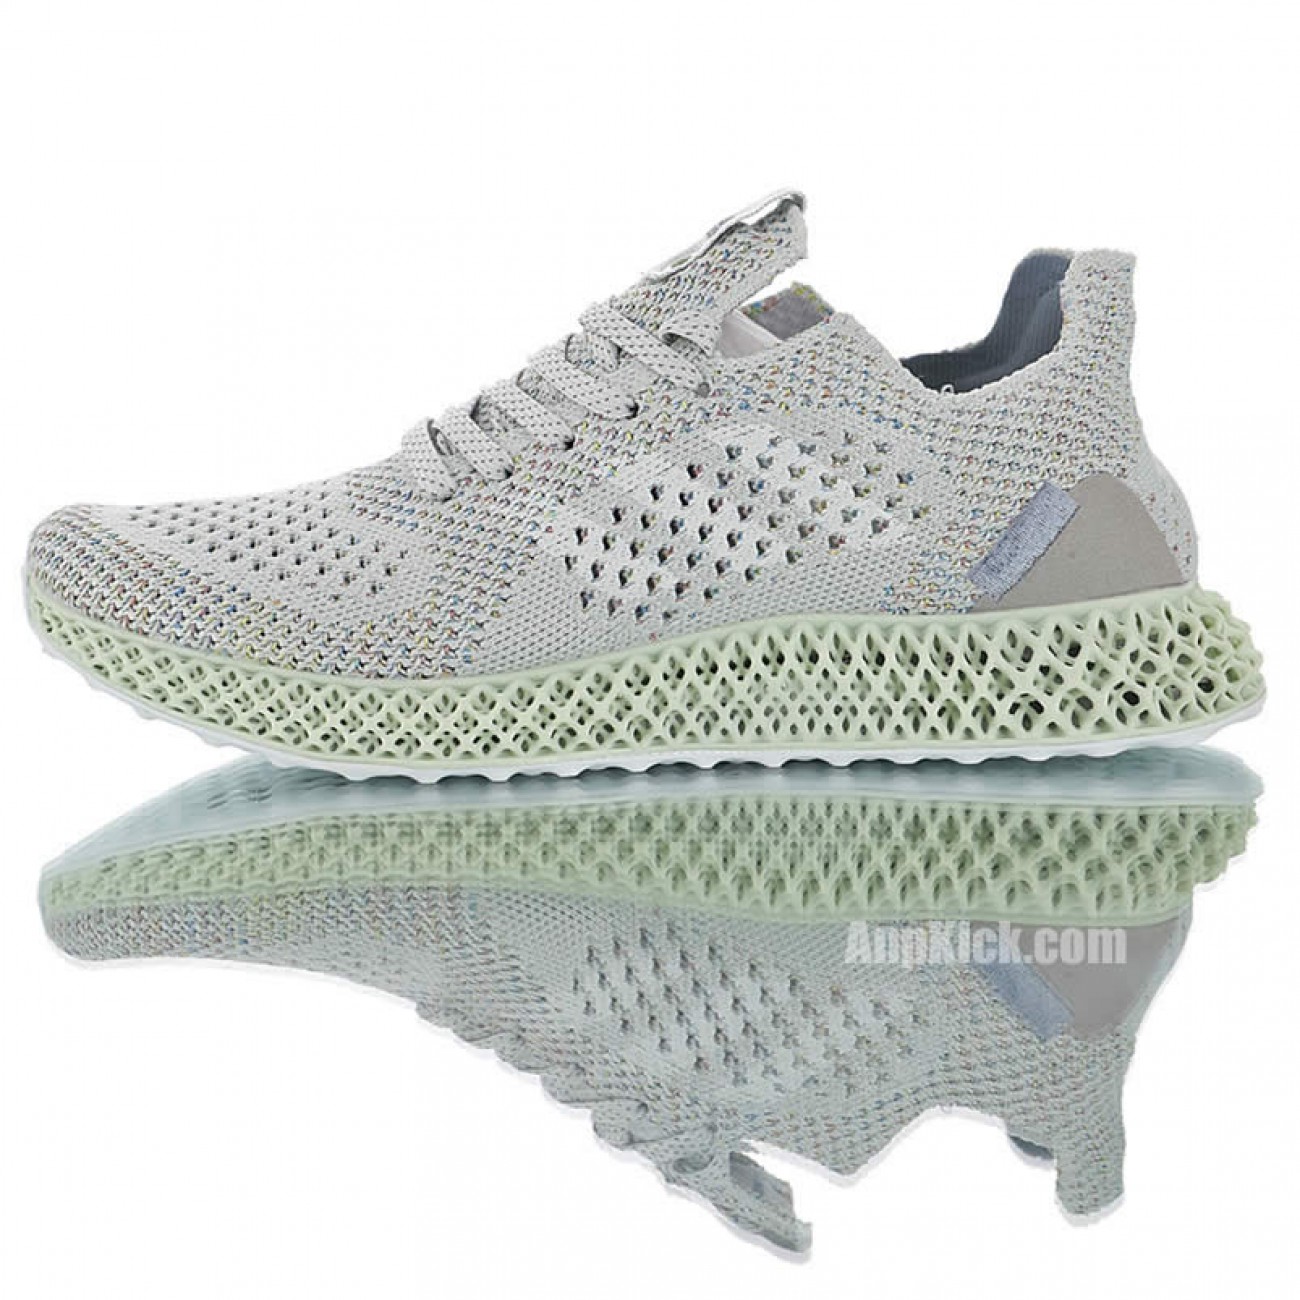 Adidas Consortium FutureCraft 4D Invincible Prism Primeknit Shoes B96613